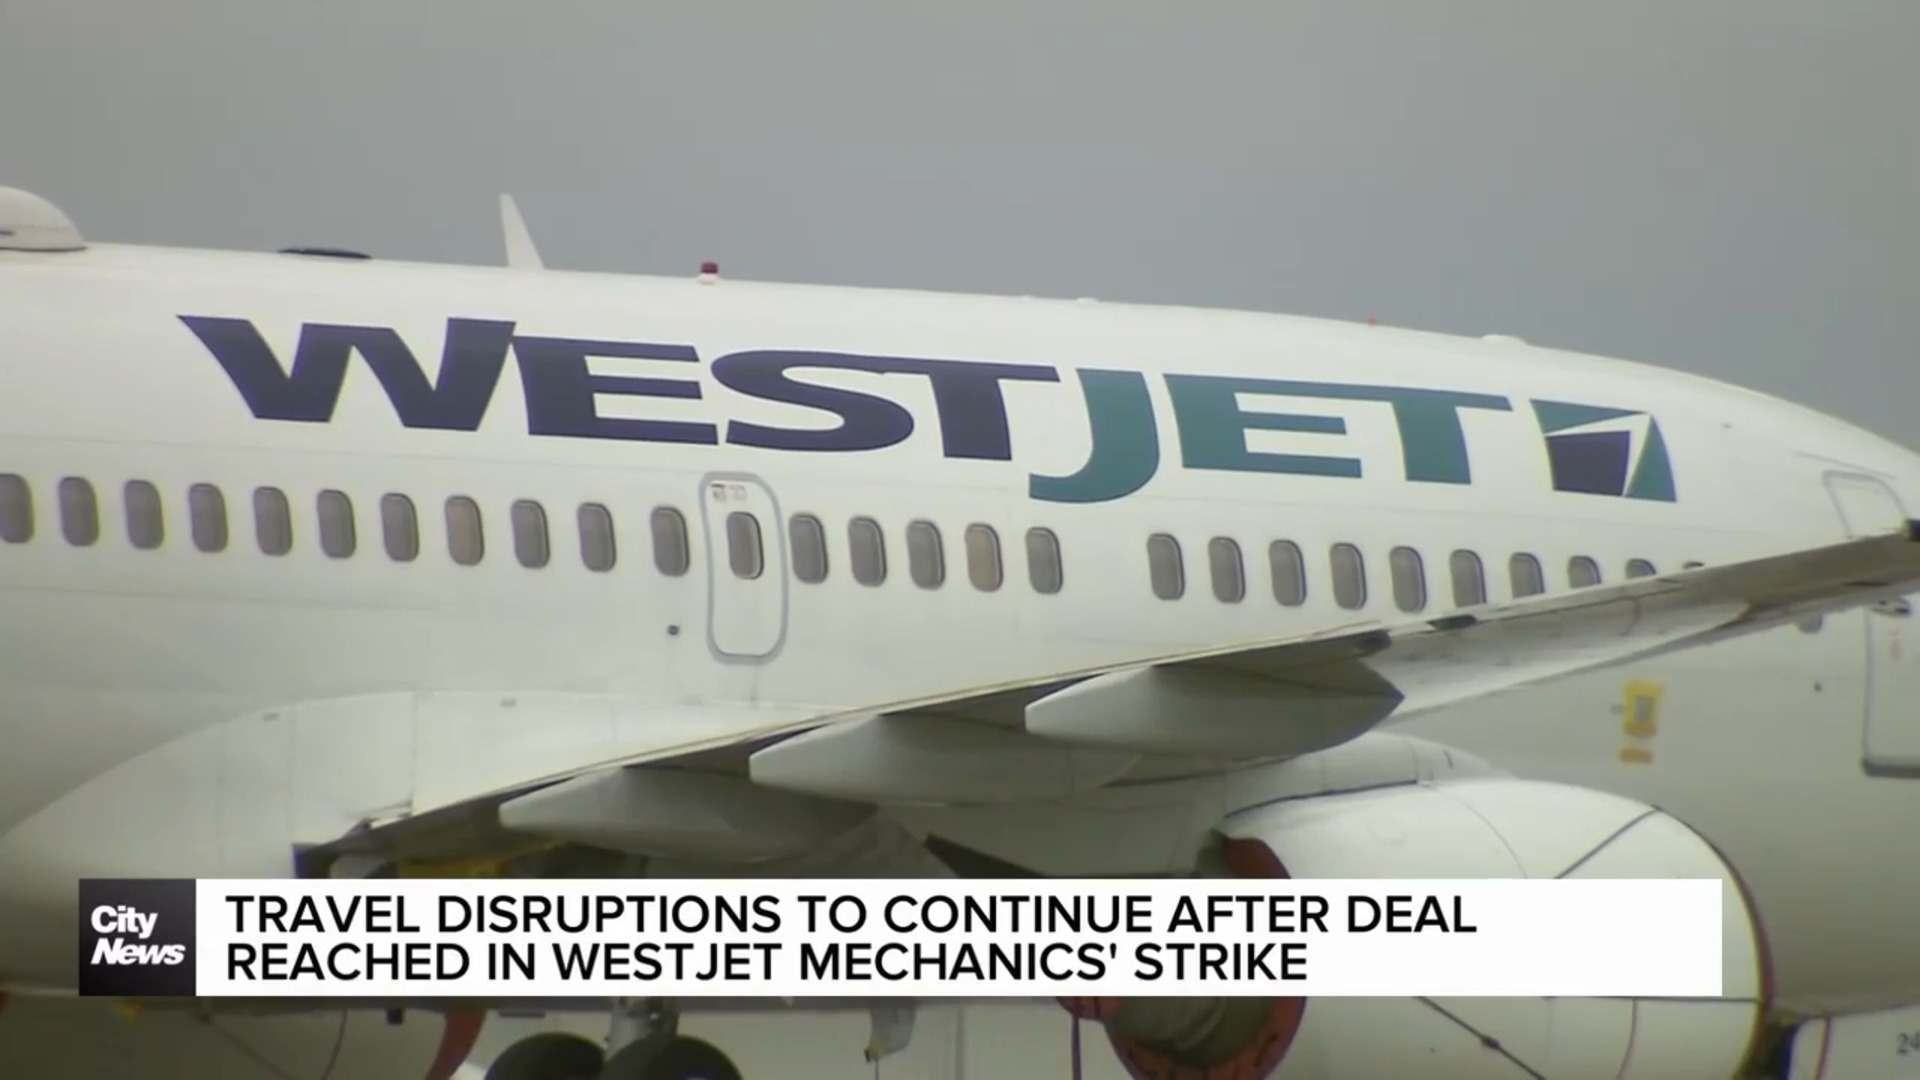 Travel disruptions to continue after tentative agreement ends WestJet mechanics’ strike